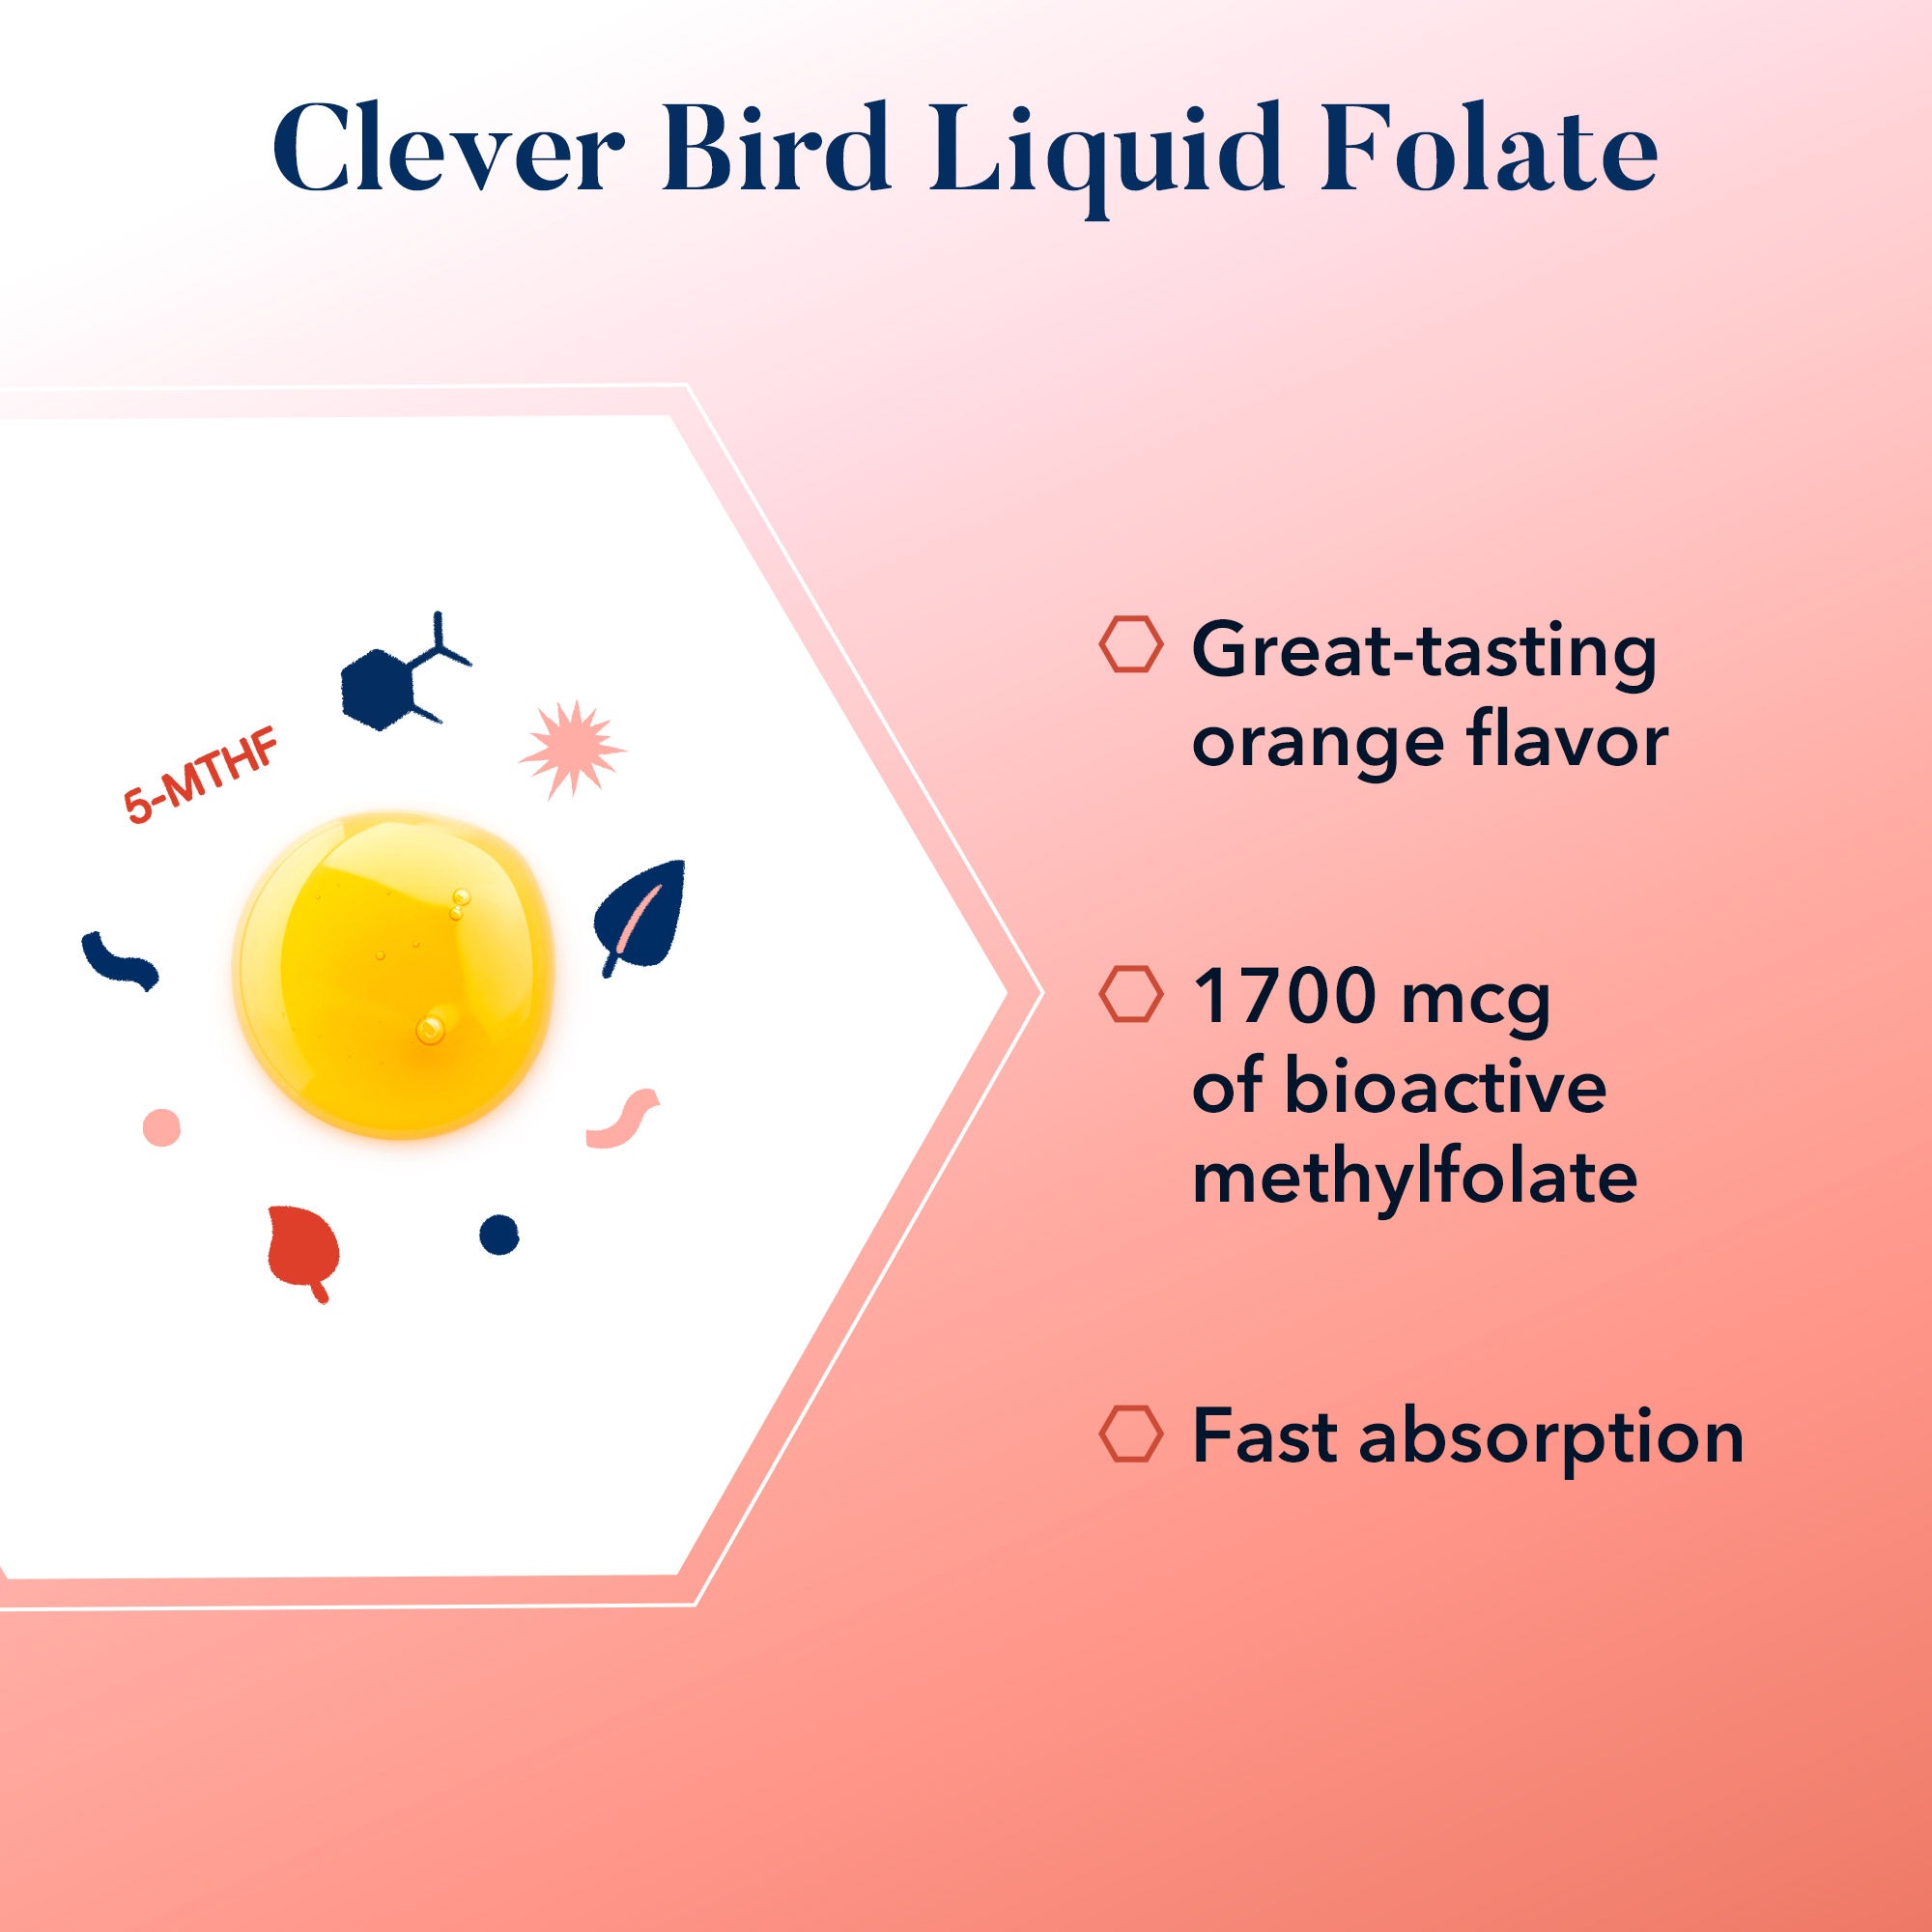 Clever Bird Liquid Folate